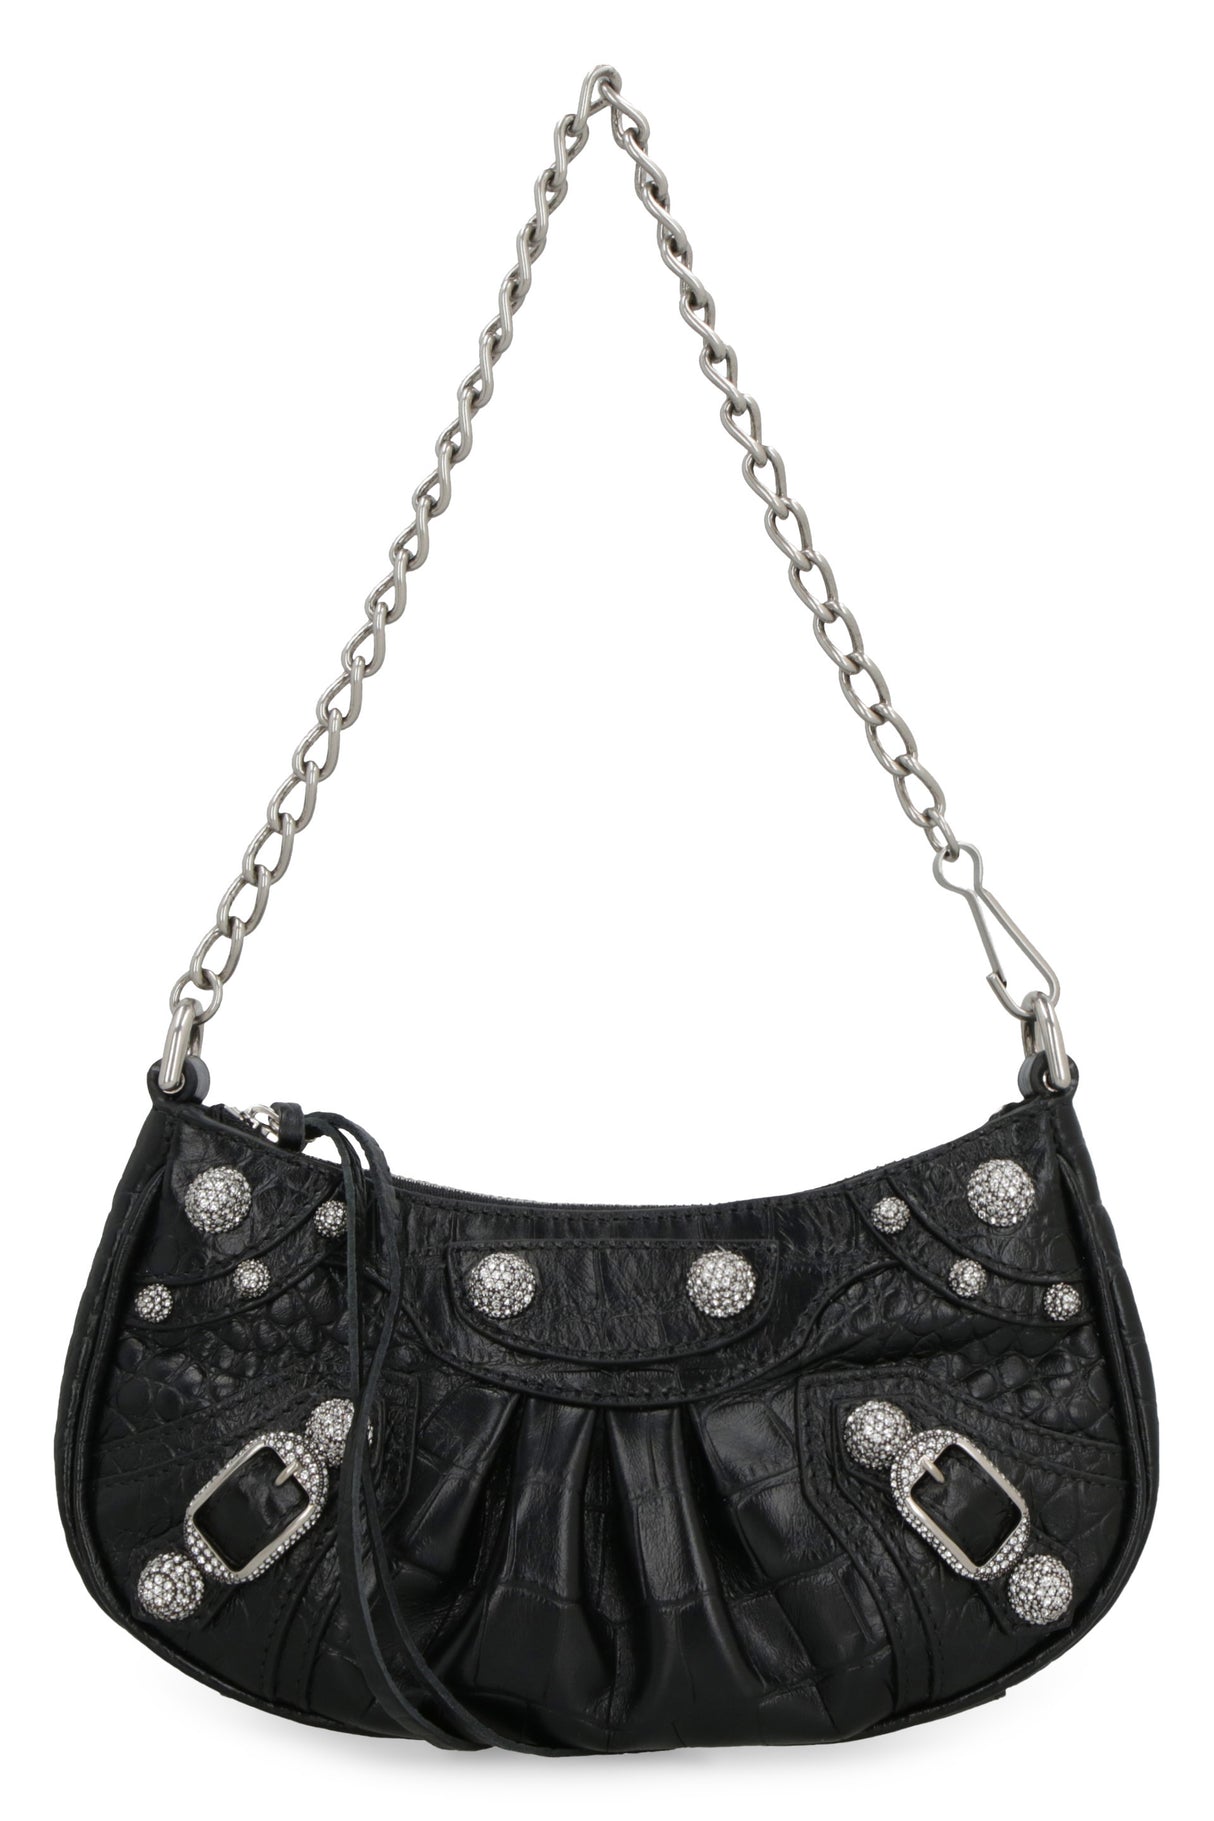 Versatile and Chic FW23 Balenciaga Croc-Print Leather Handbag for Women